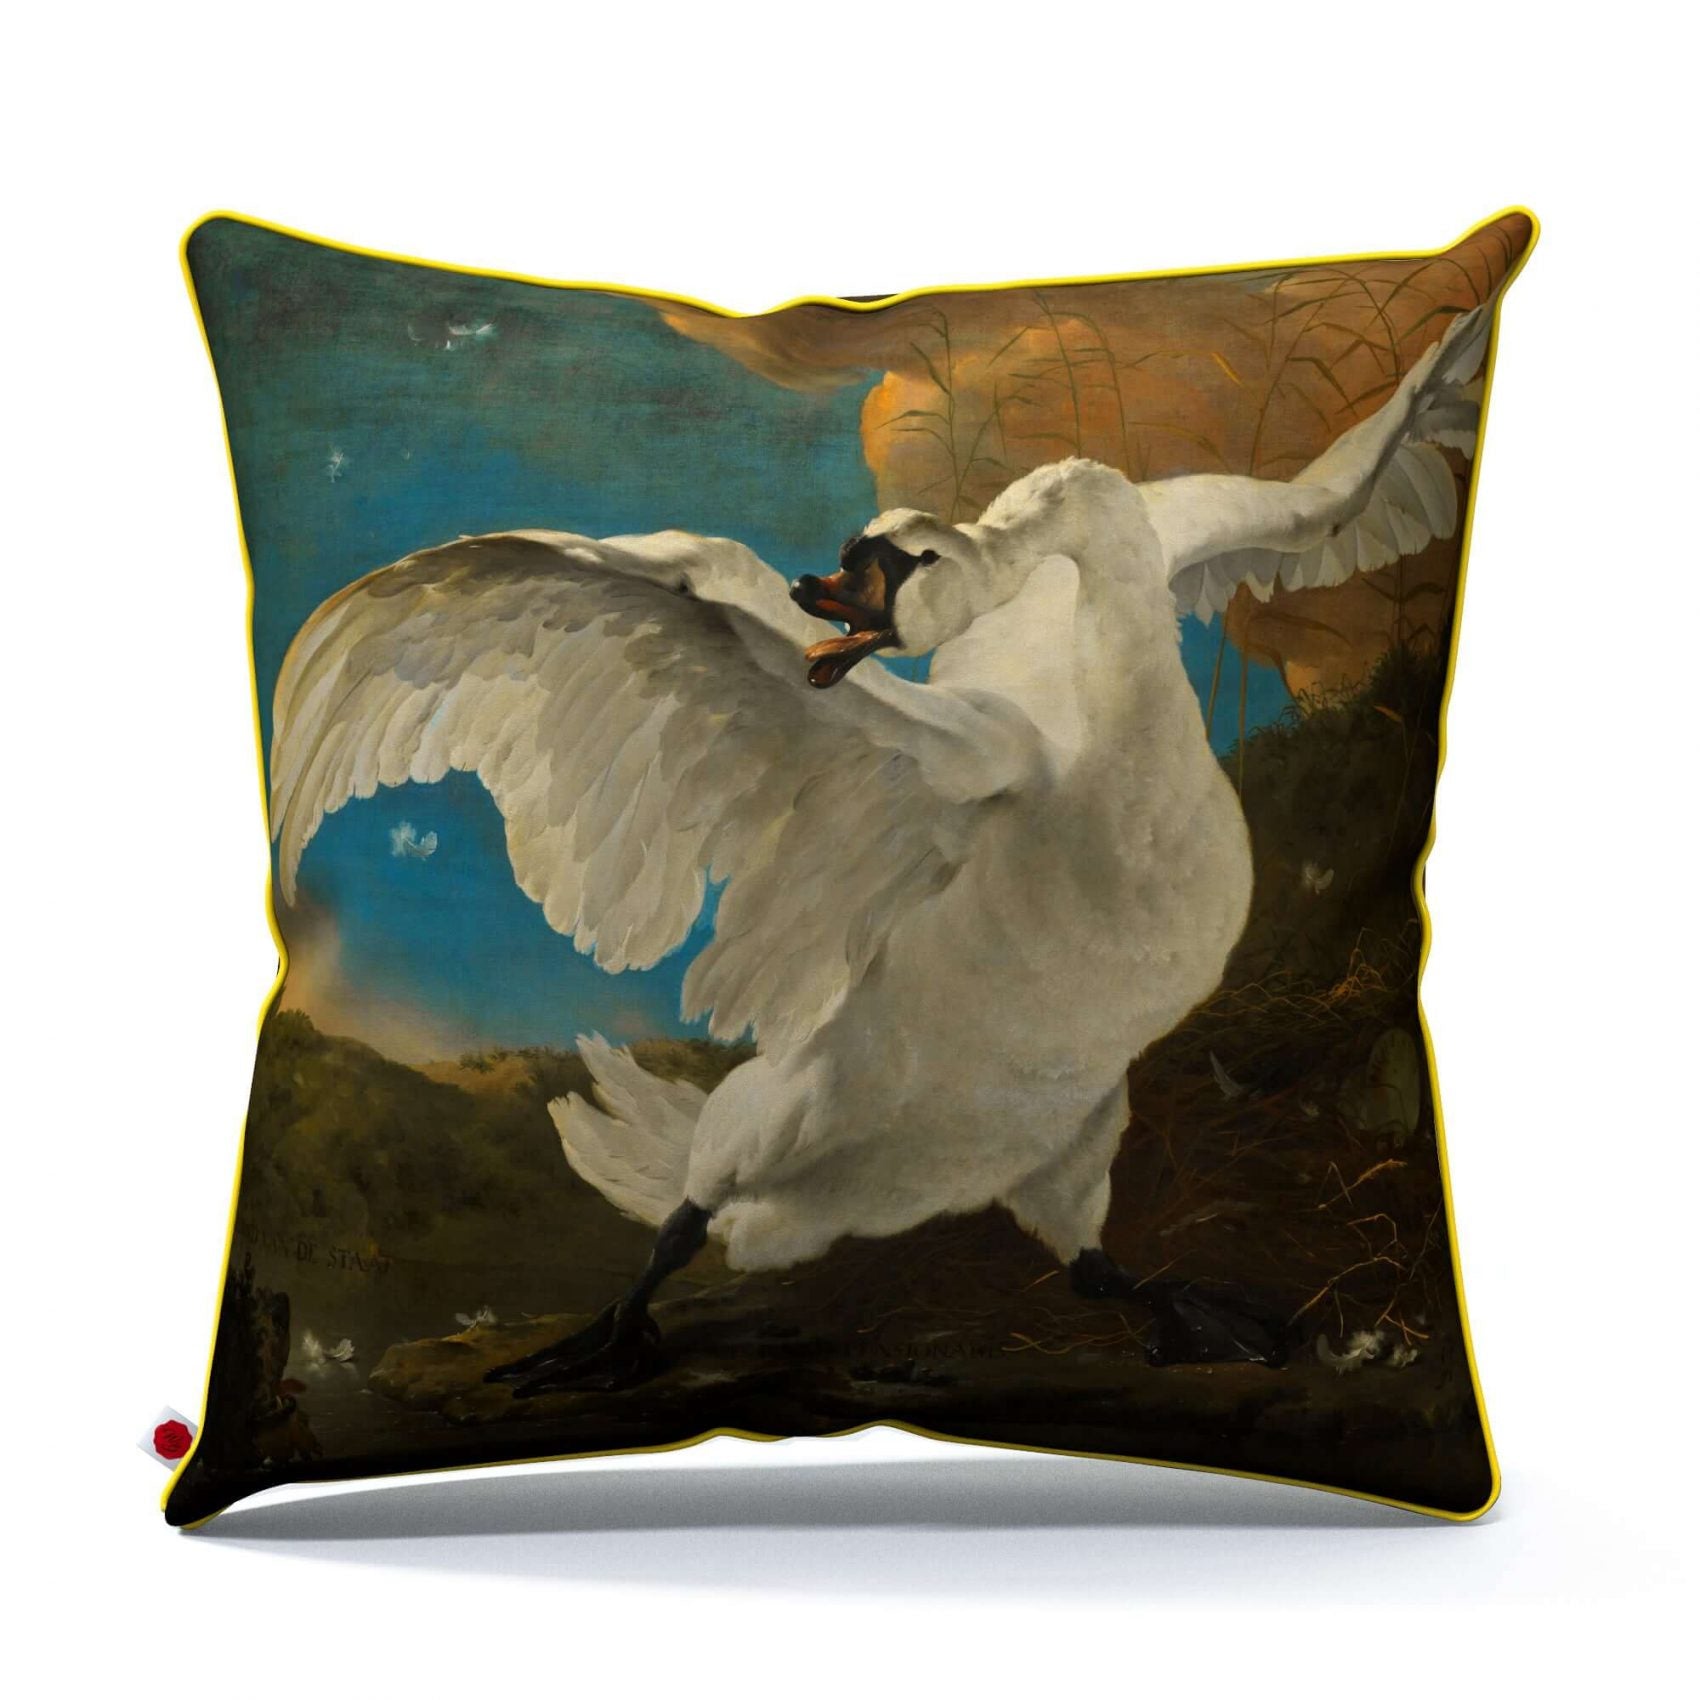 The threatened swan pillow 50 x 50 cm